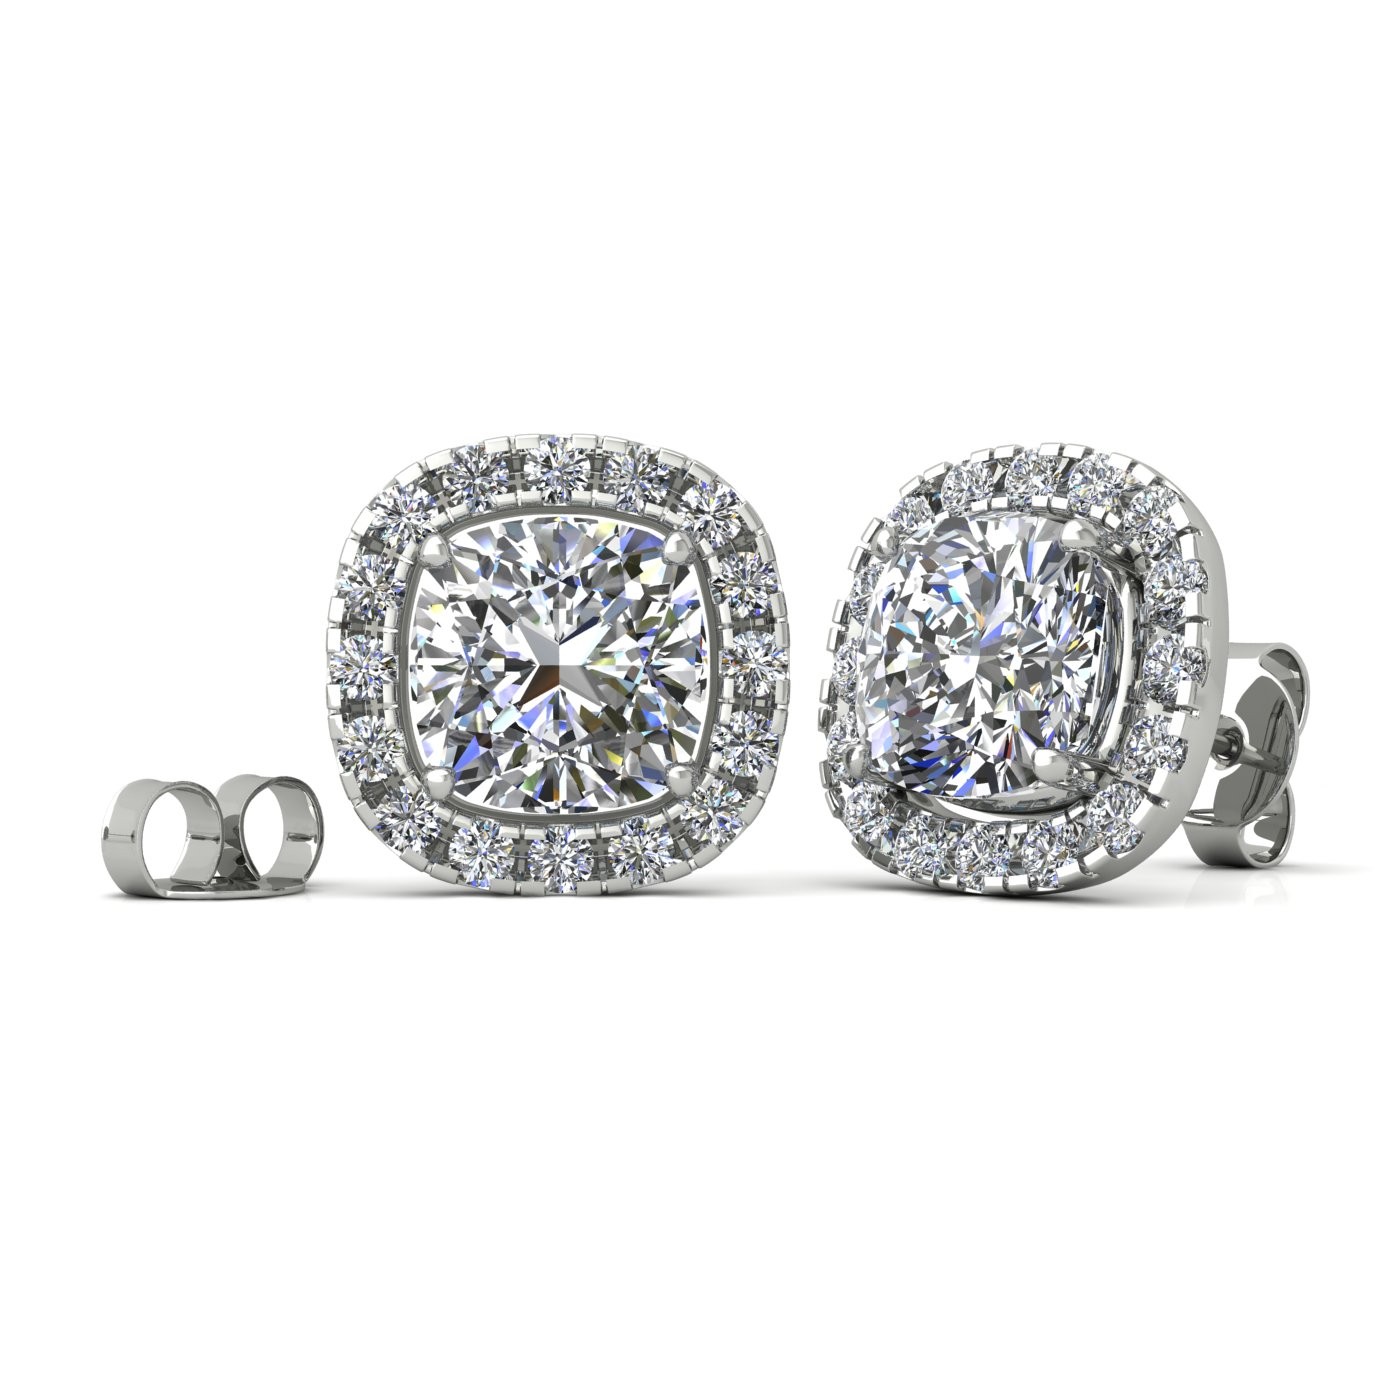 18k white gold  0,7 ct each (1,4 tcw) 4 prongs cushion shape diamond earrings with diamond pavÉ set halo Photos & images